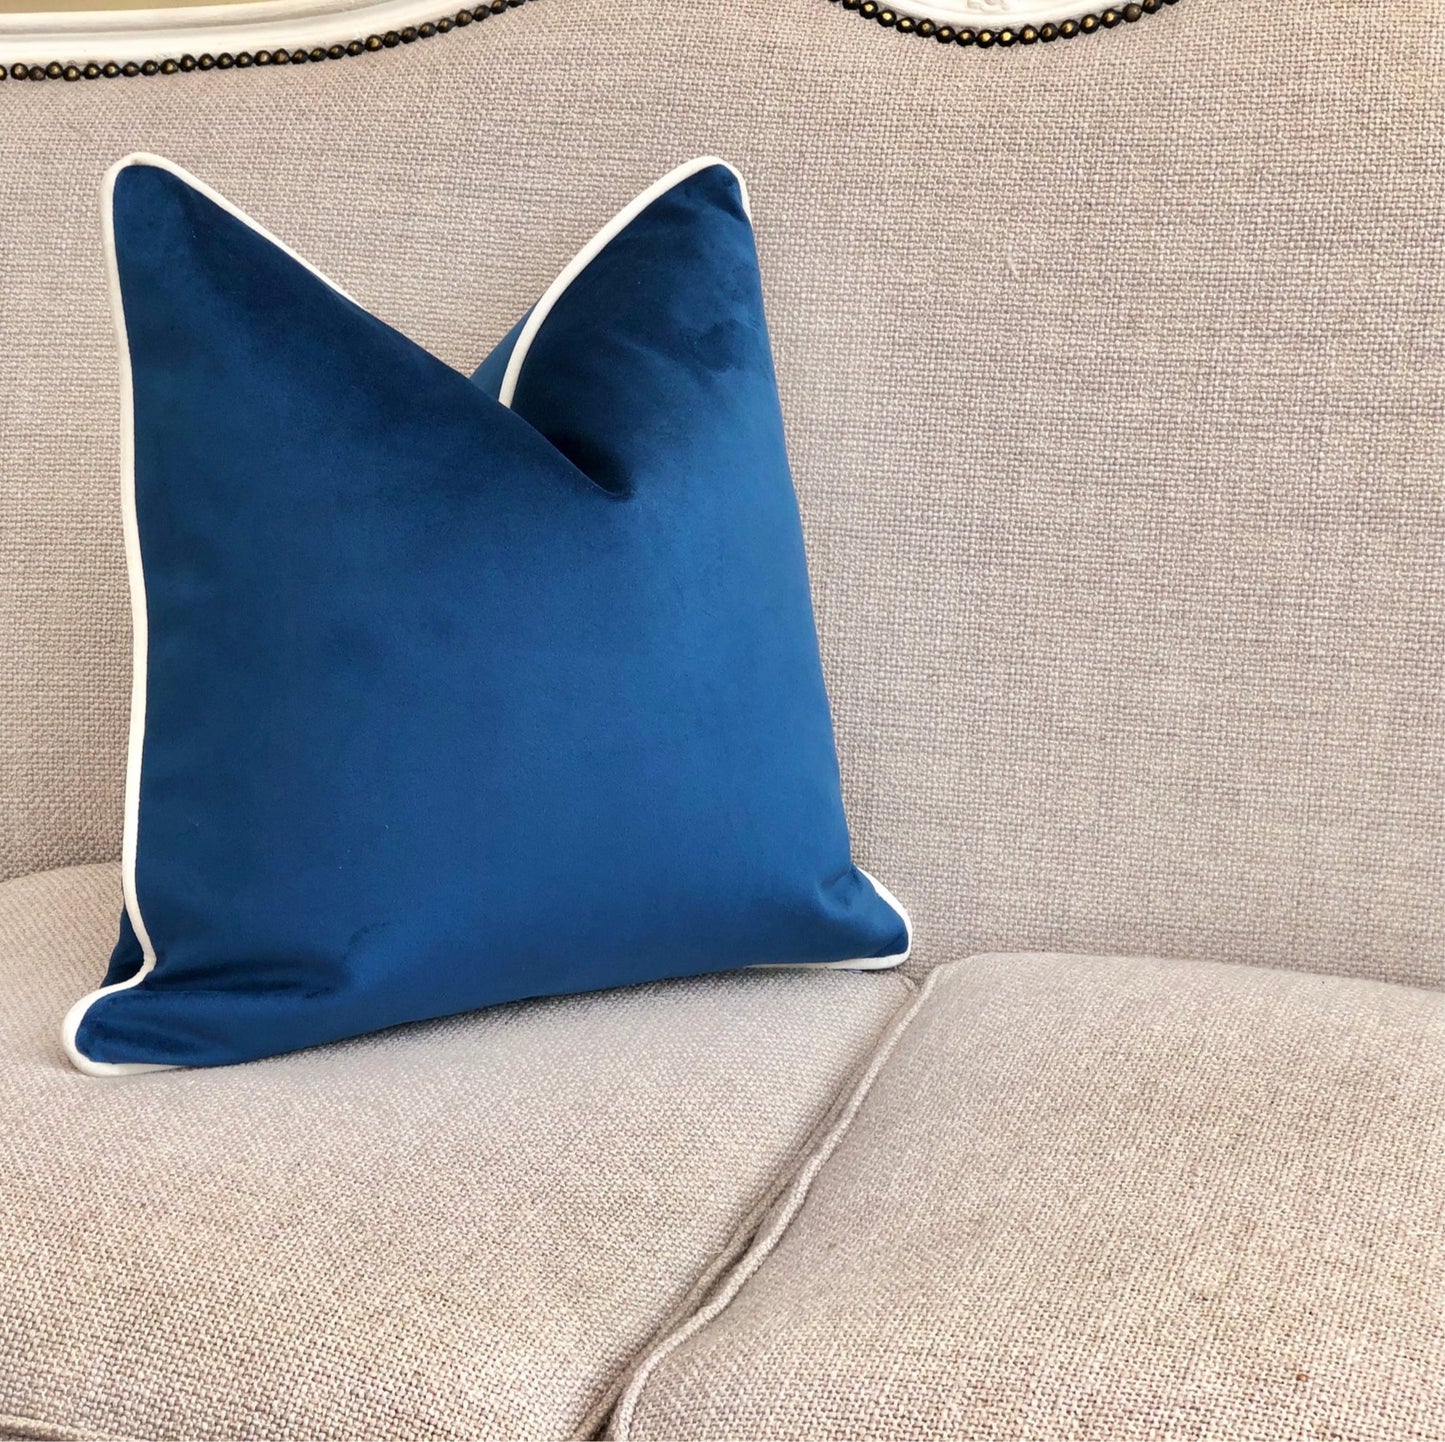 blue and white cushion